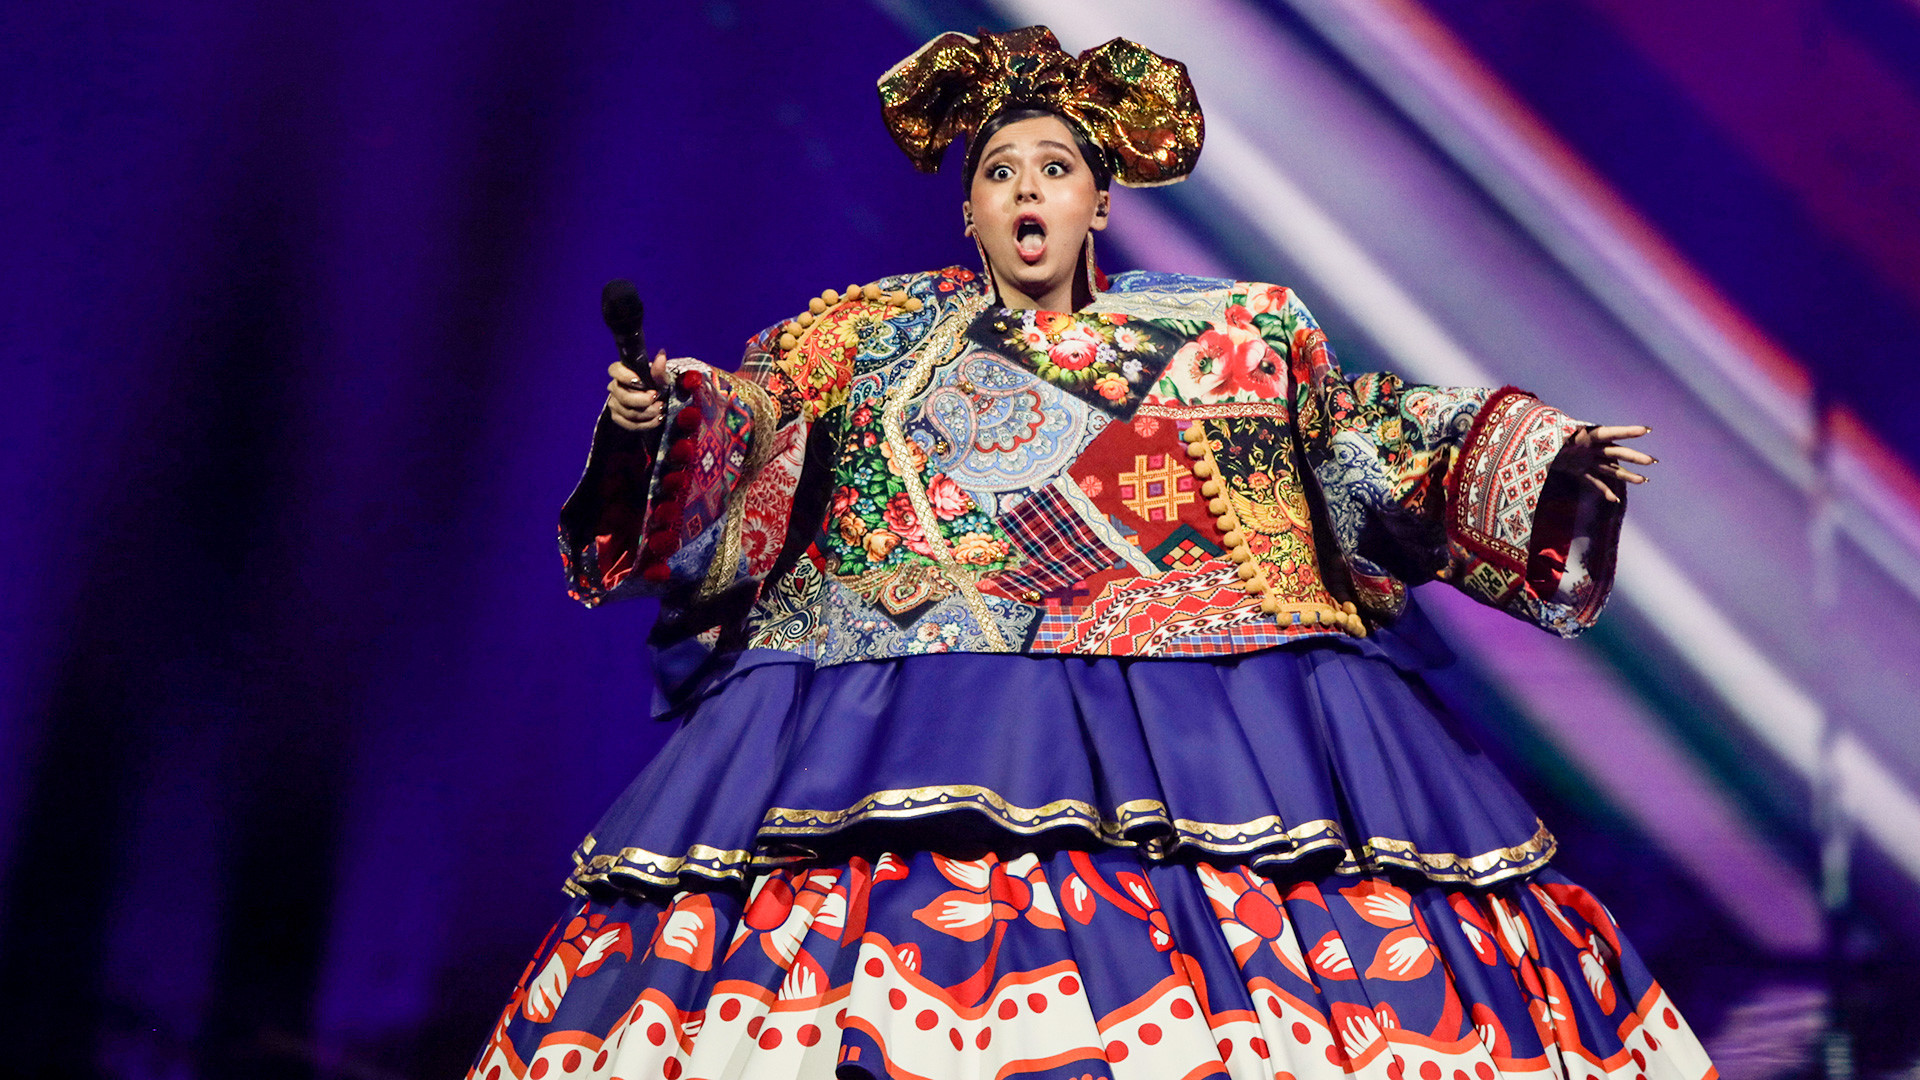 EBU: Russia will not compete in Eurovision 2022